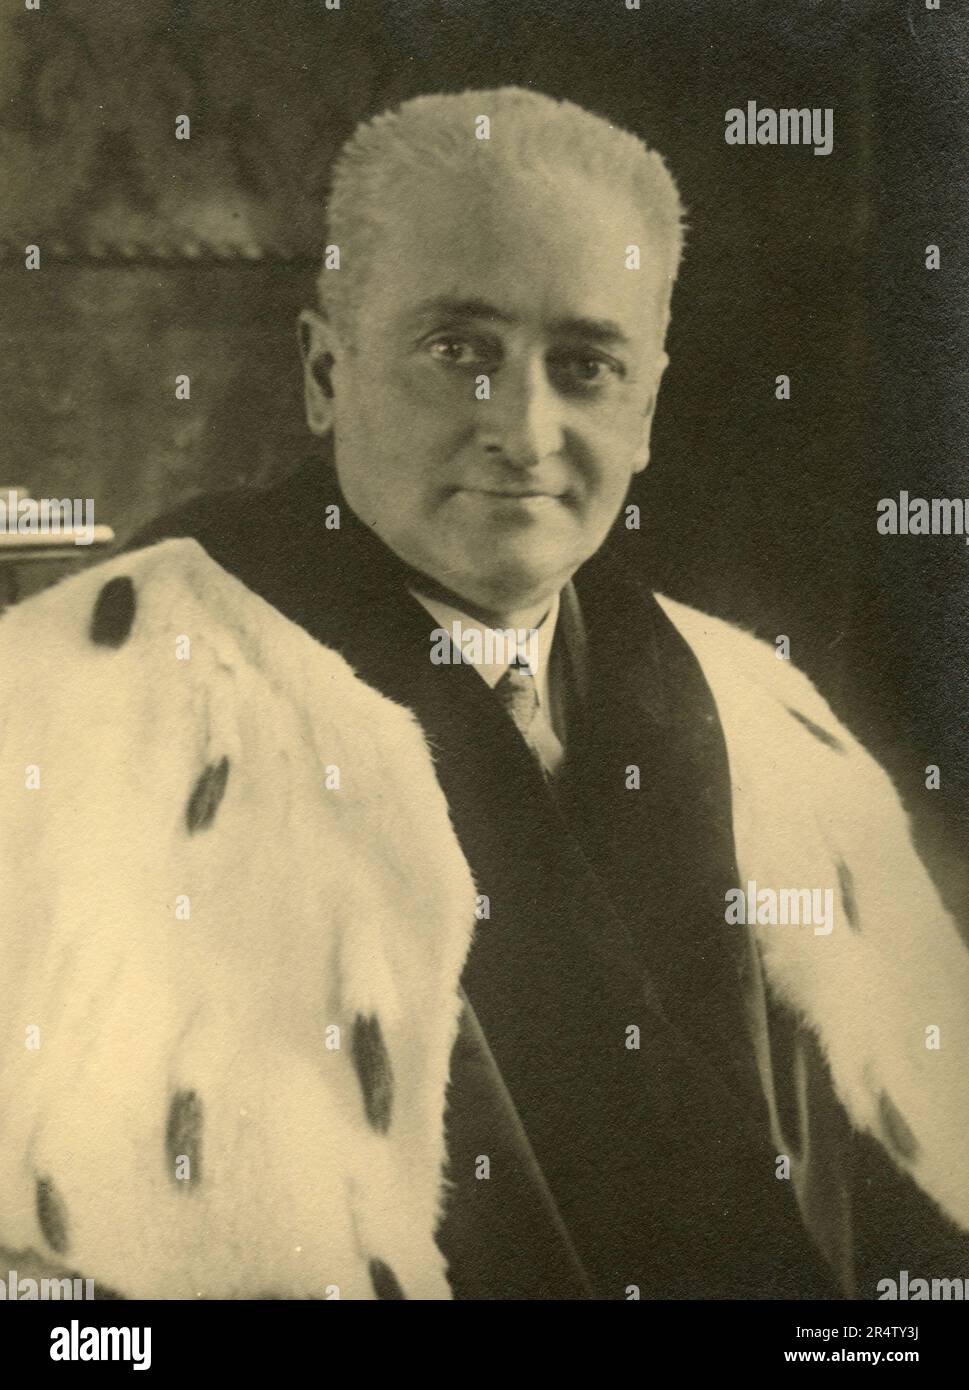 Philopher italien et juriste Giorgio Del Vecchio, Italie 1941 Banque D'Images